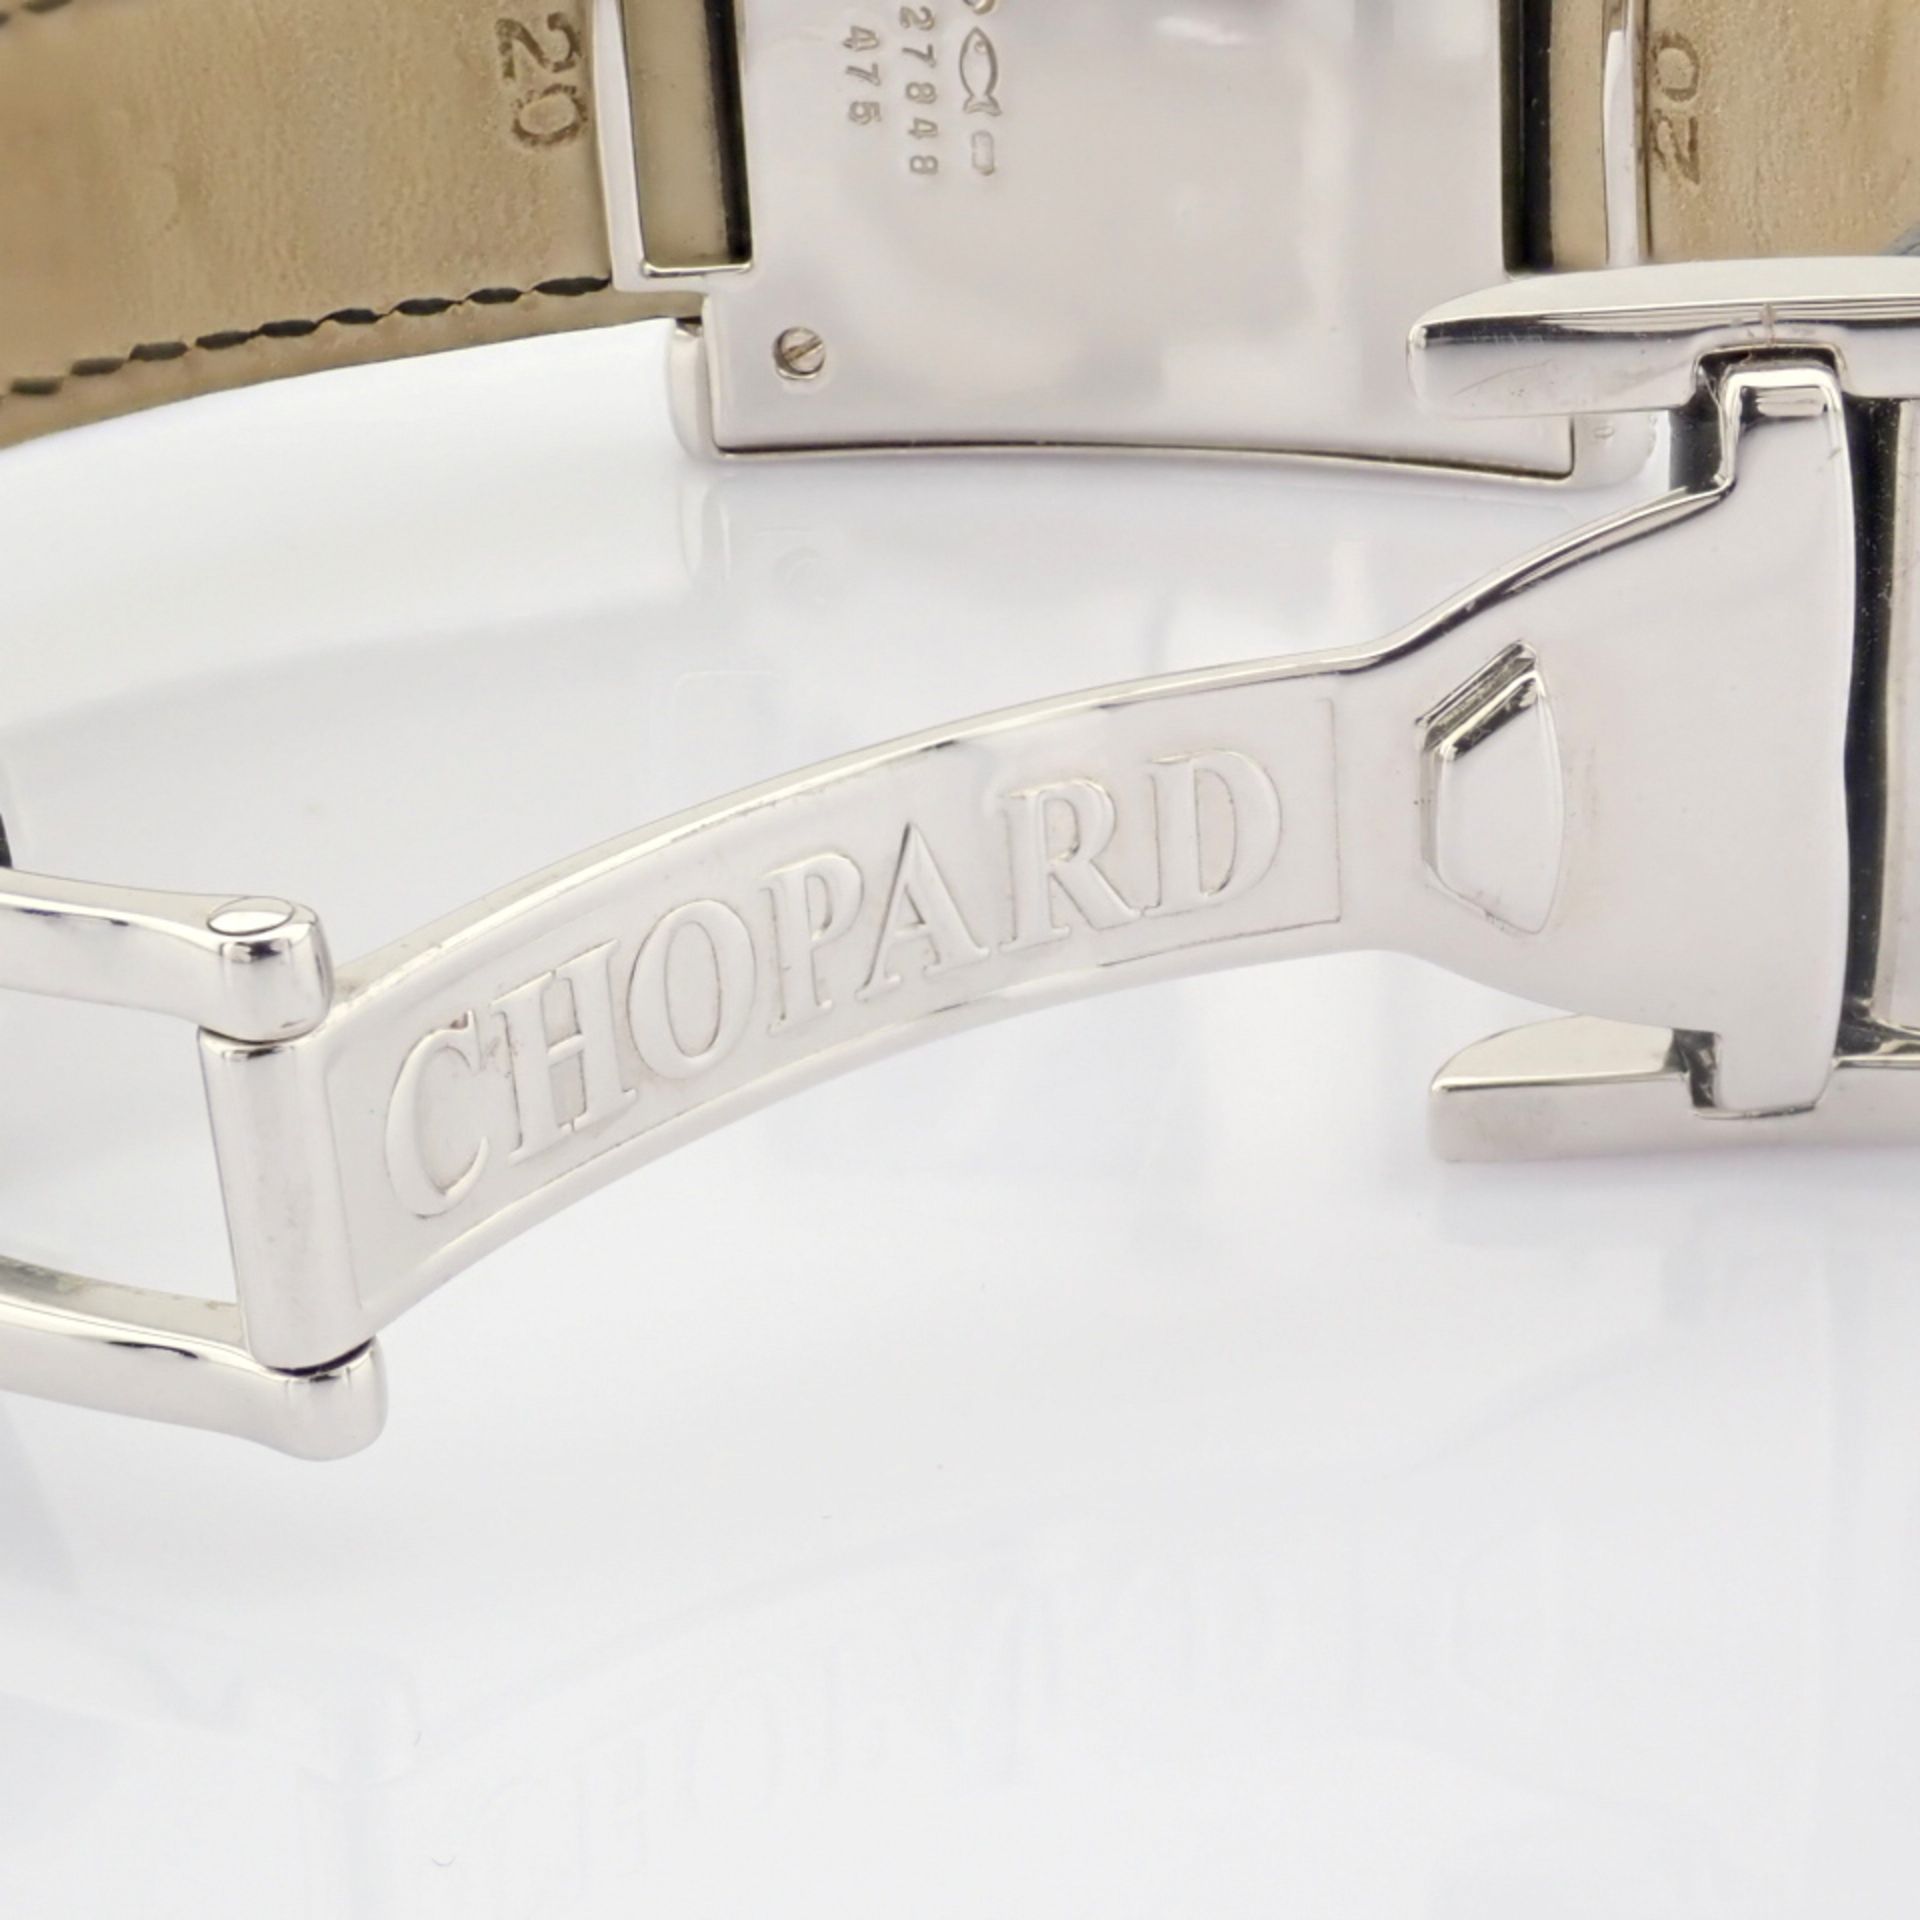 Chopard / La Strada - Lady's 18K White Gold Wrist Watch - Image 11 of 13